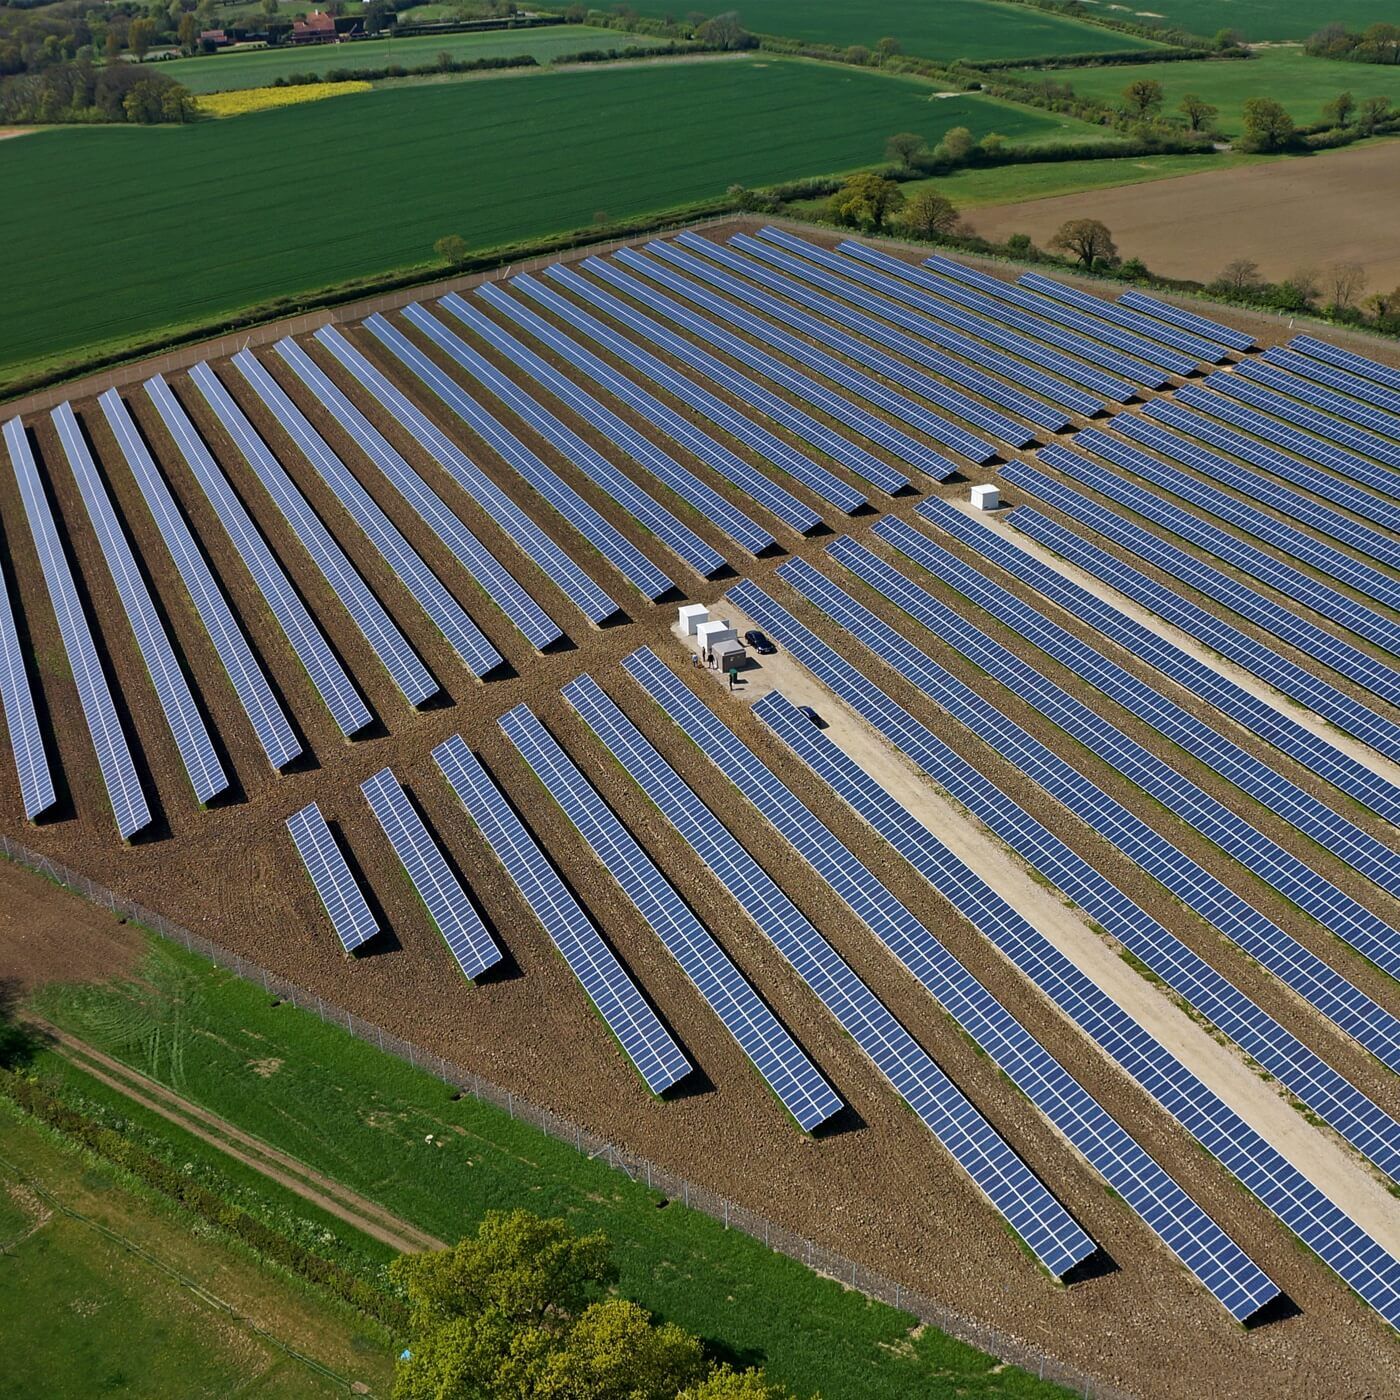 Solar panels on a solar farm